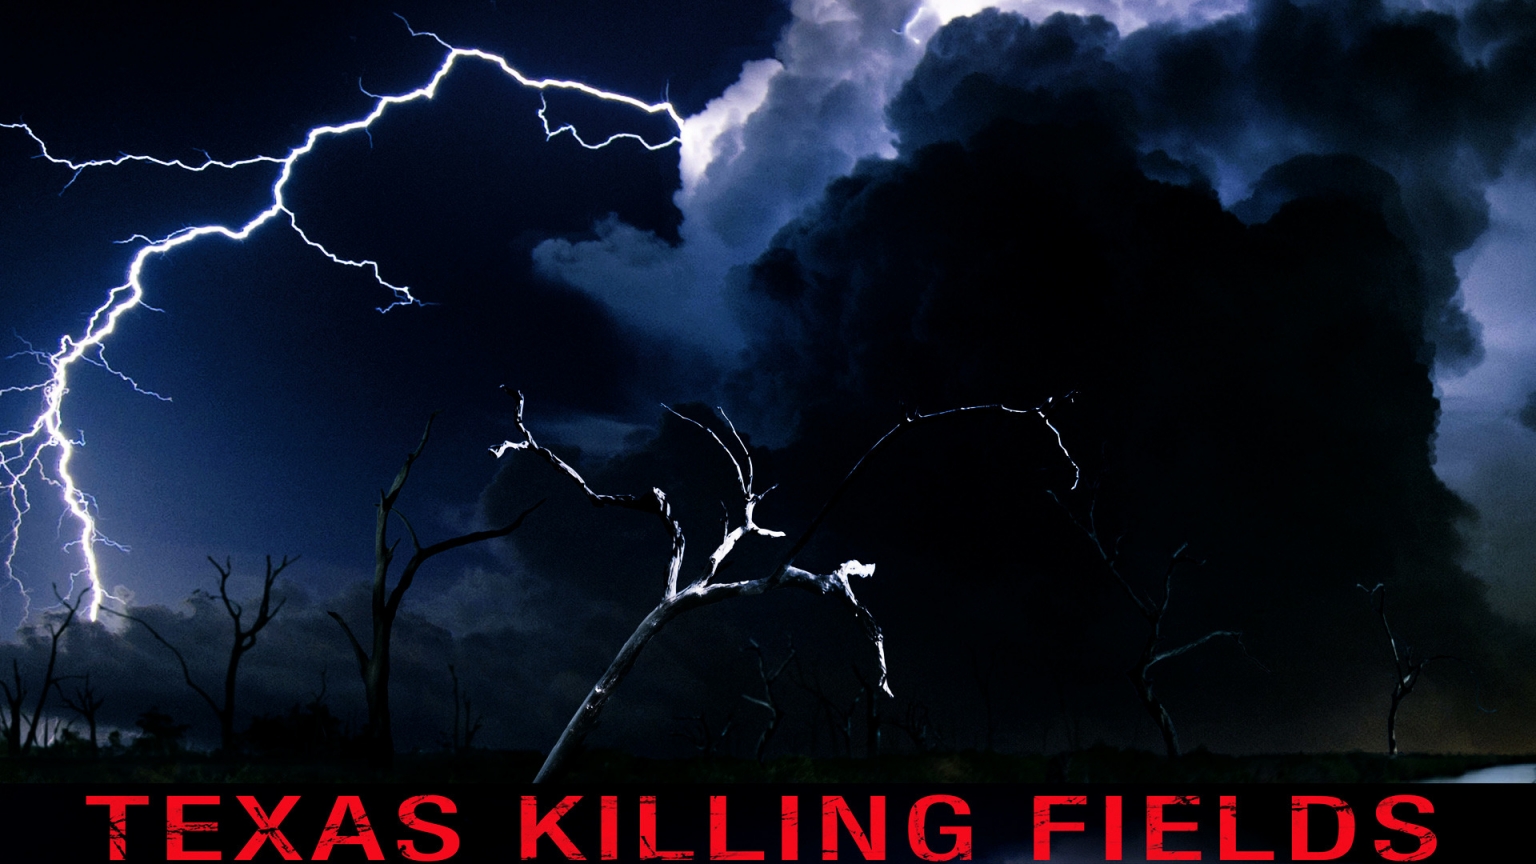 Texas Killing Fields Poster for 1536 x 864 HDTV resolution